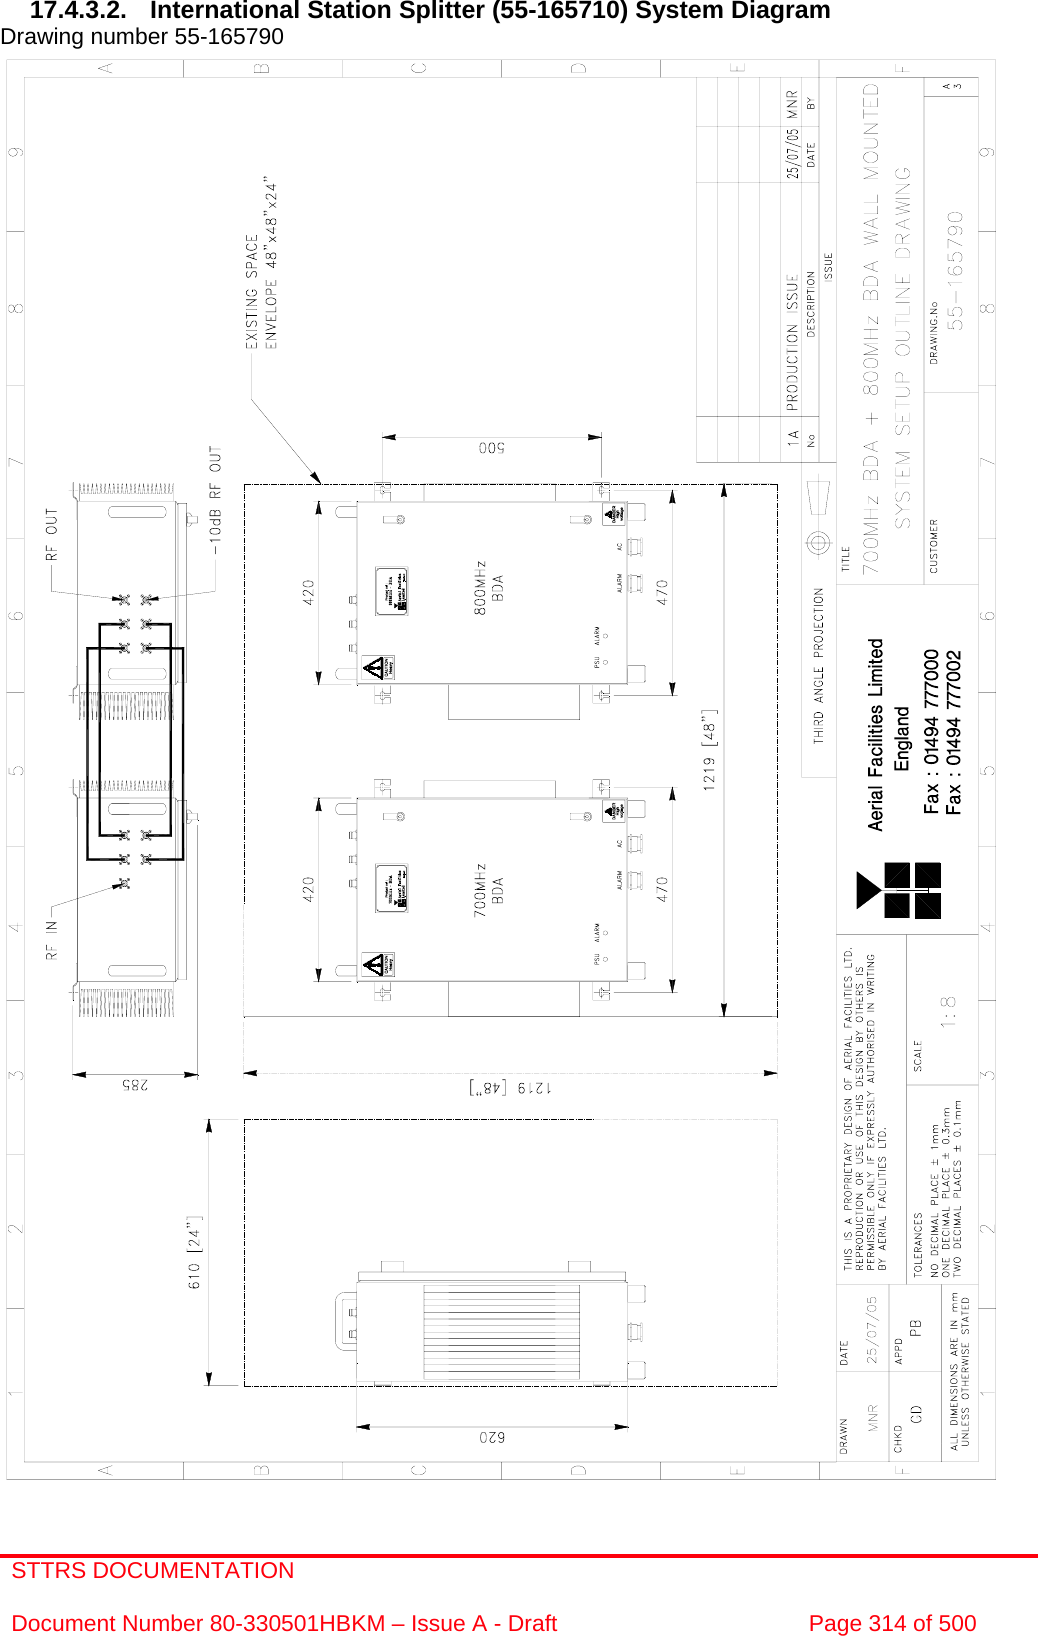 STTRS DOCUMENTATION  Document Number 80-330501HBKM – Issue A - Draft  Page 314 of 500   17.4.3.2. International Station Splitter (55-165710) System Diagram Drawing number 55-165790                                                        